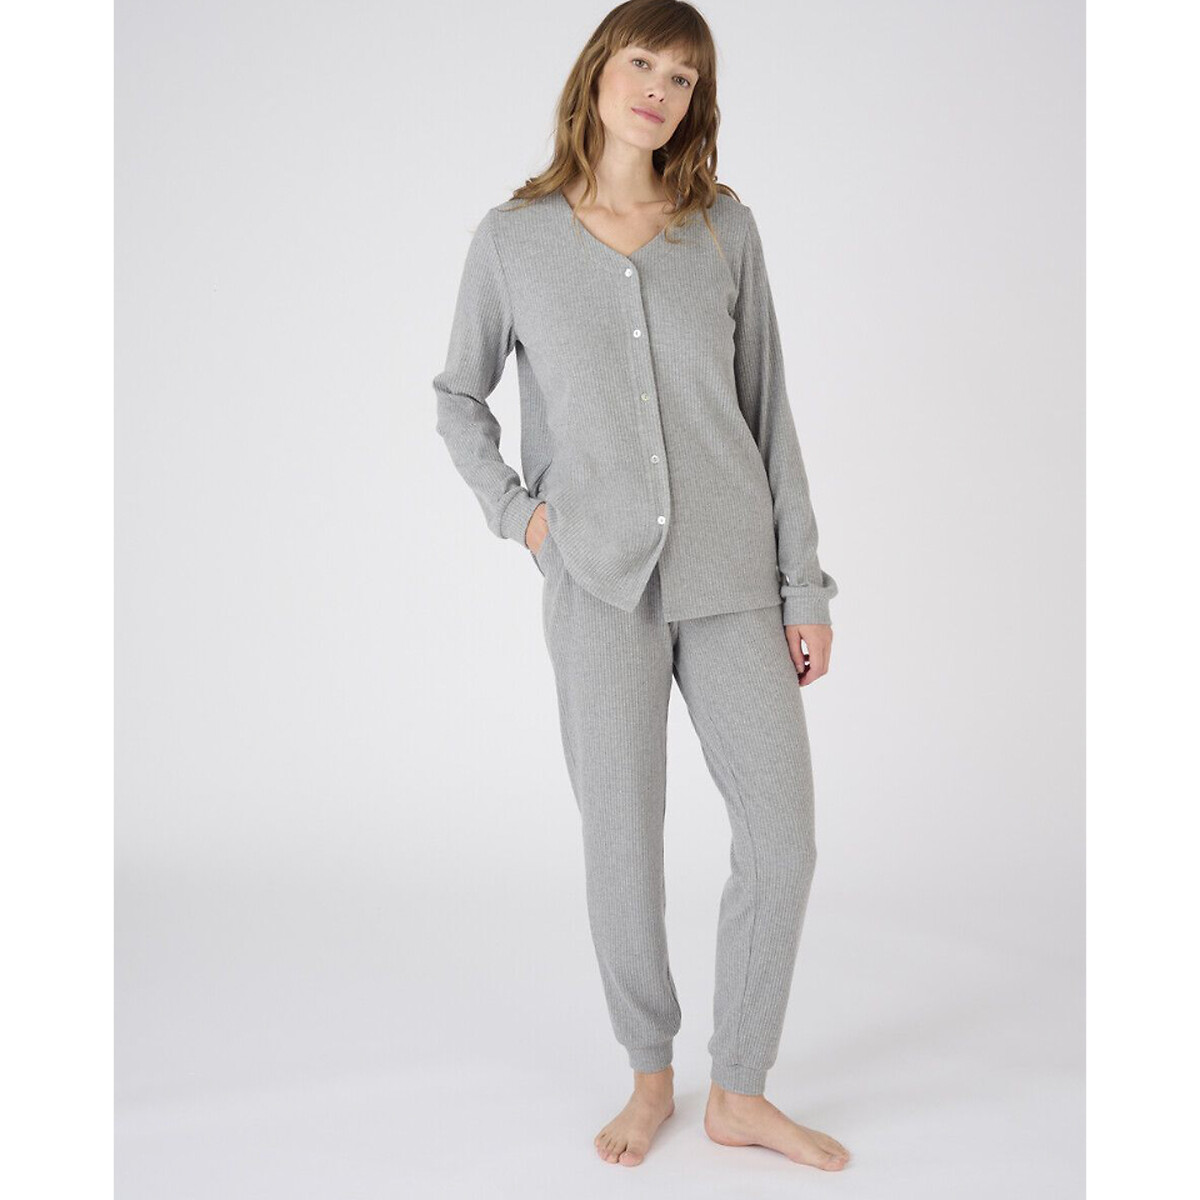 Комплект пижамный, Thermolactyl La Redoute S серый LaRedoute, размер S